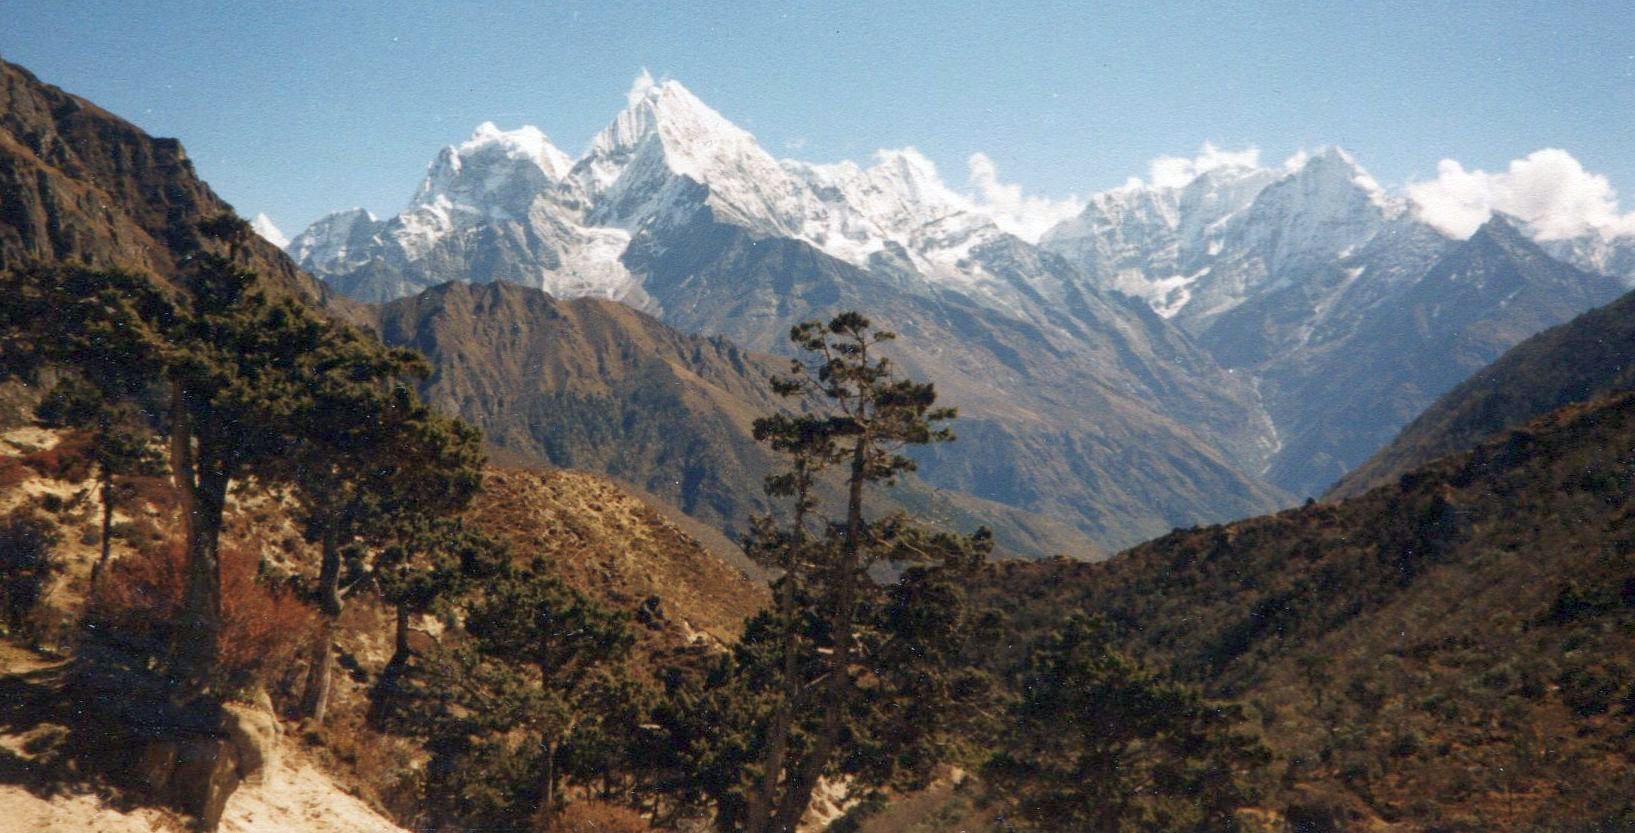 Mount Kang Taiga and Thamserku from Thame Village